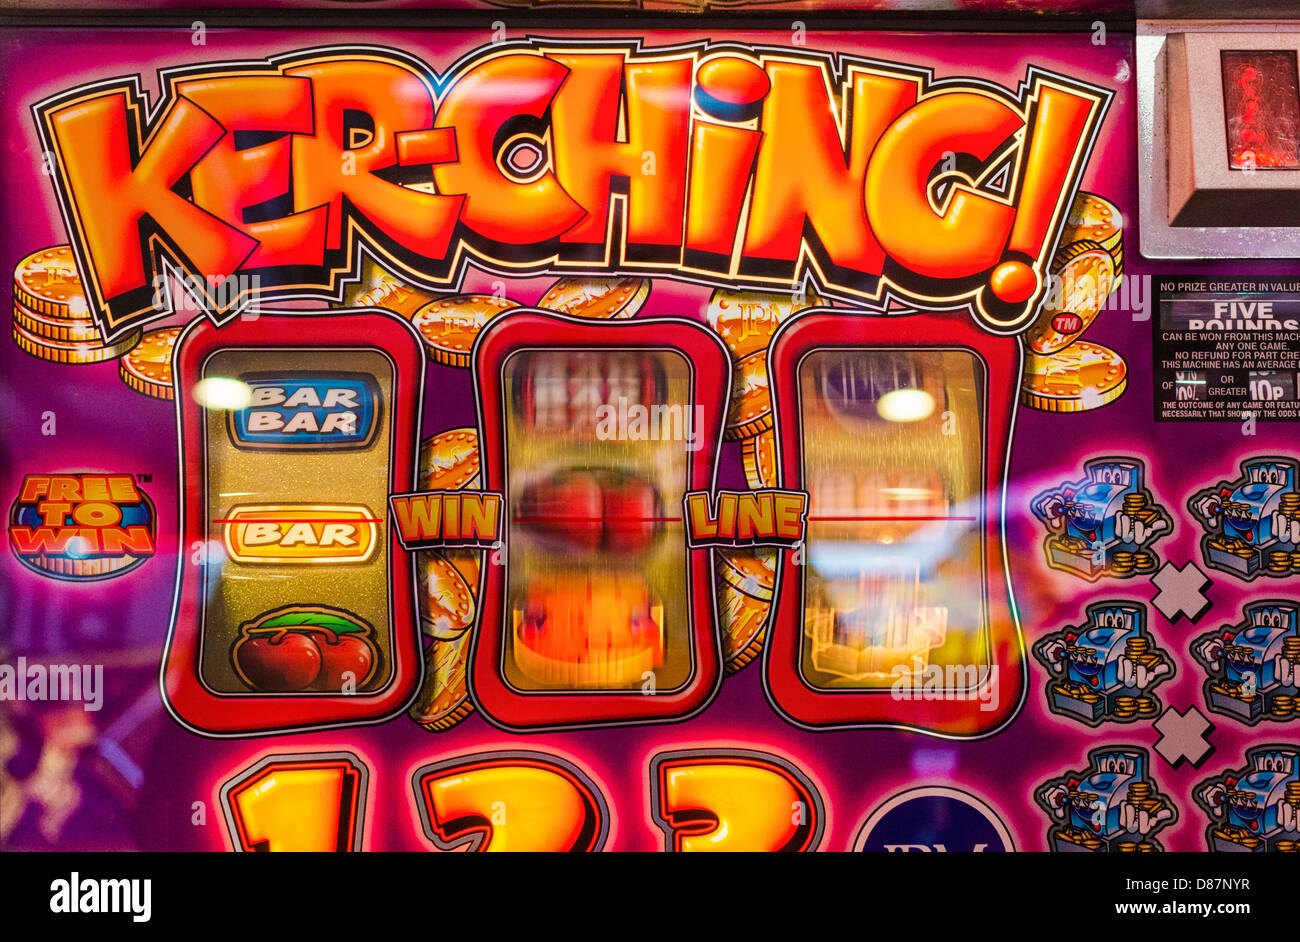 Fruit machine spinning reels in an amusement arcade, UK Stock Photo